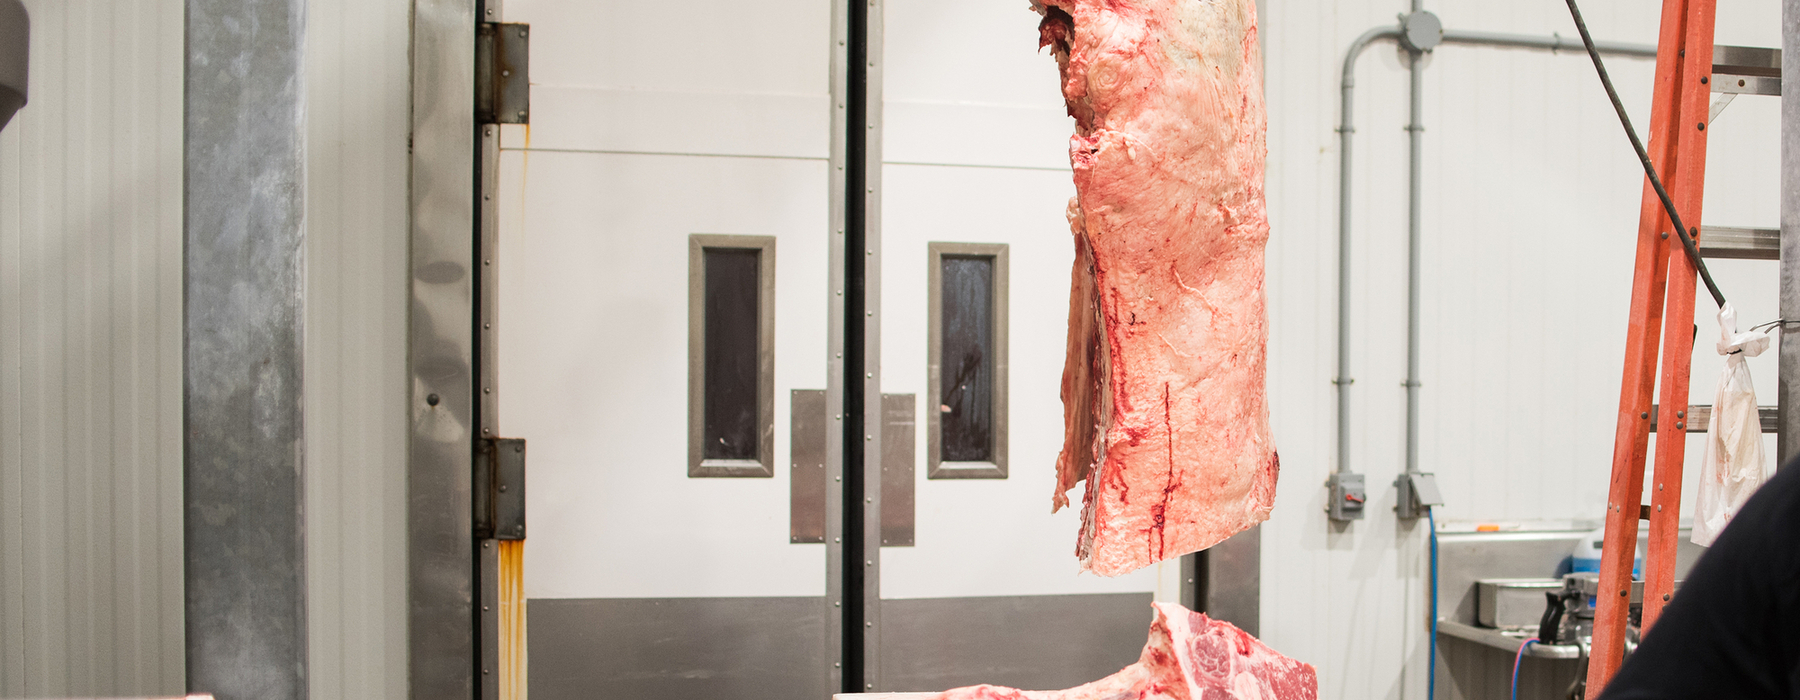 Meat locker interior; hanging meat